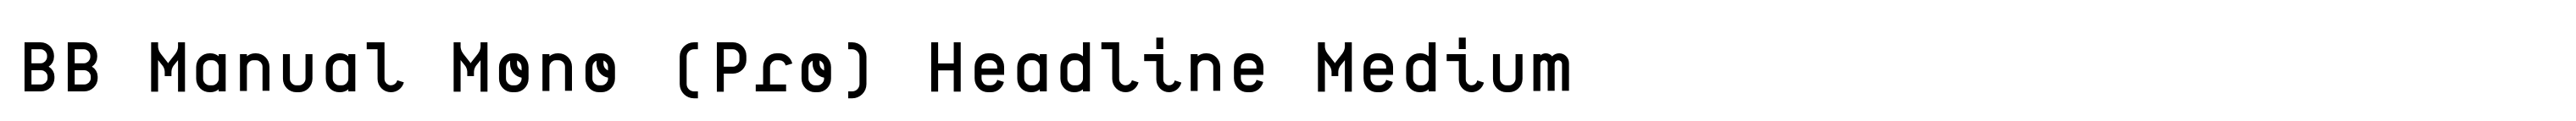 BB Manual Mono (Pro) Headline Medium